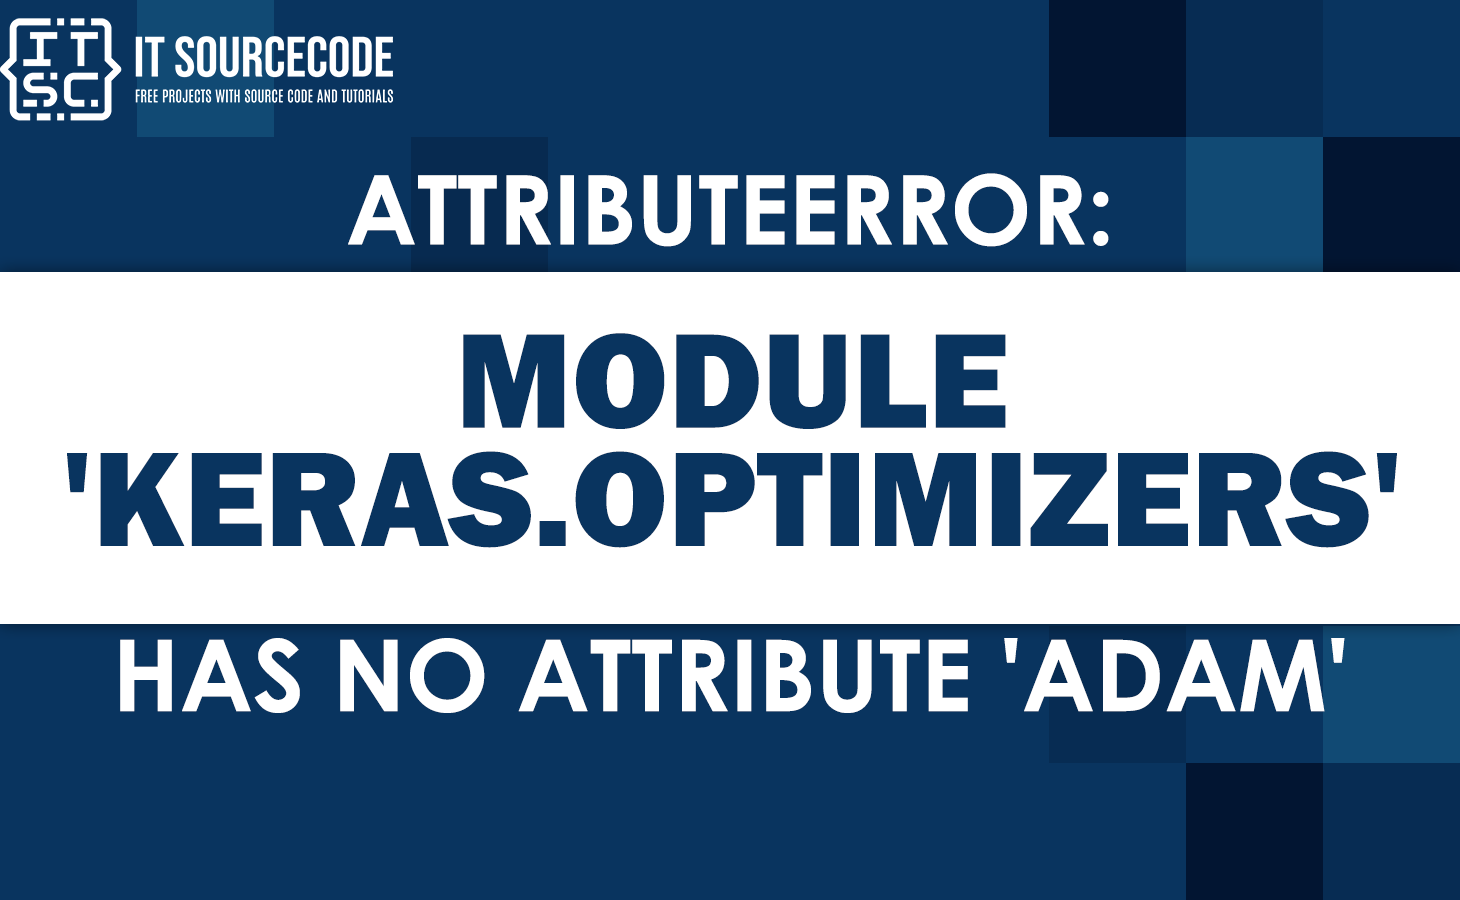 Attributeerror module 'keras.optimizers' has no attribute 'adam'